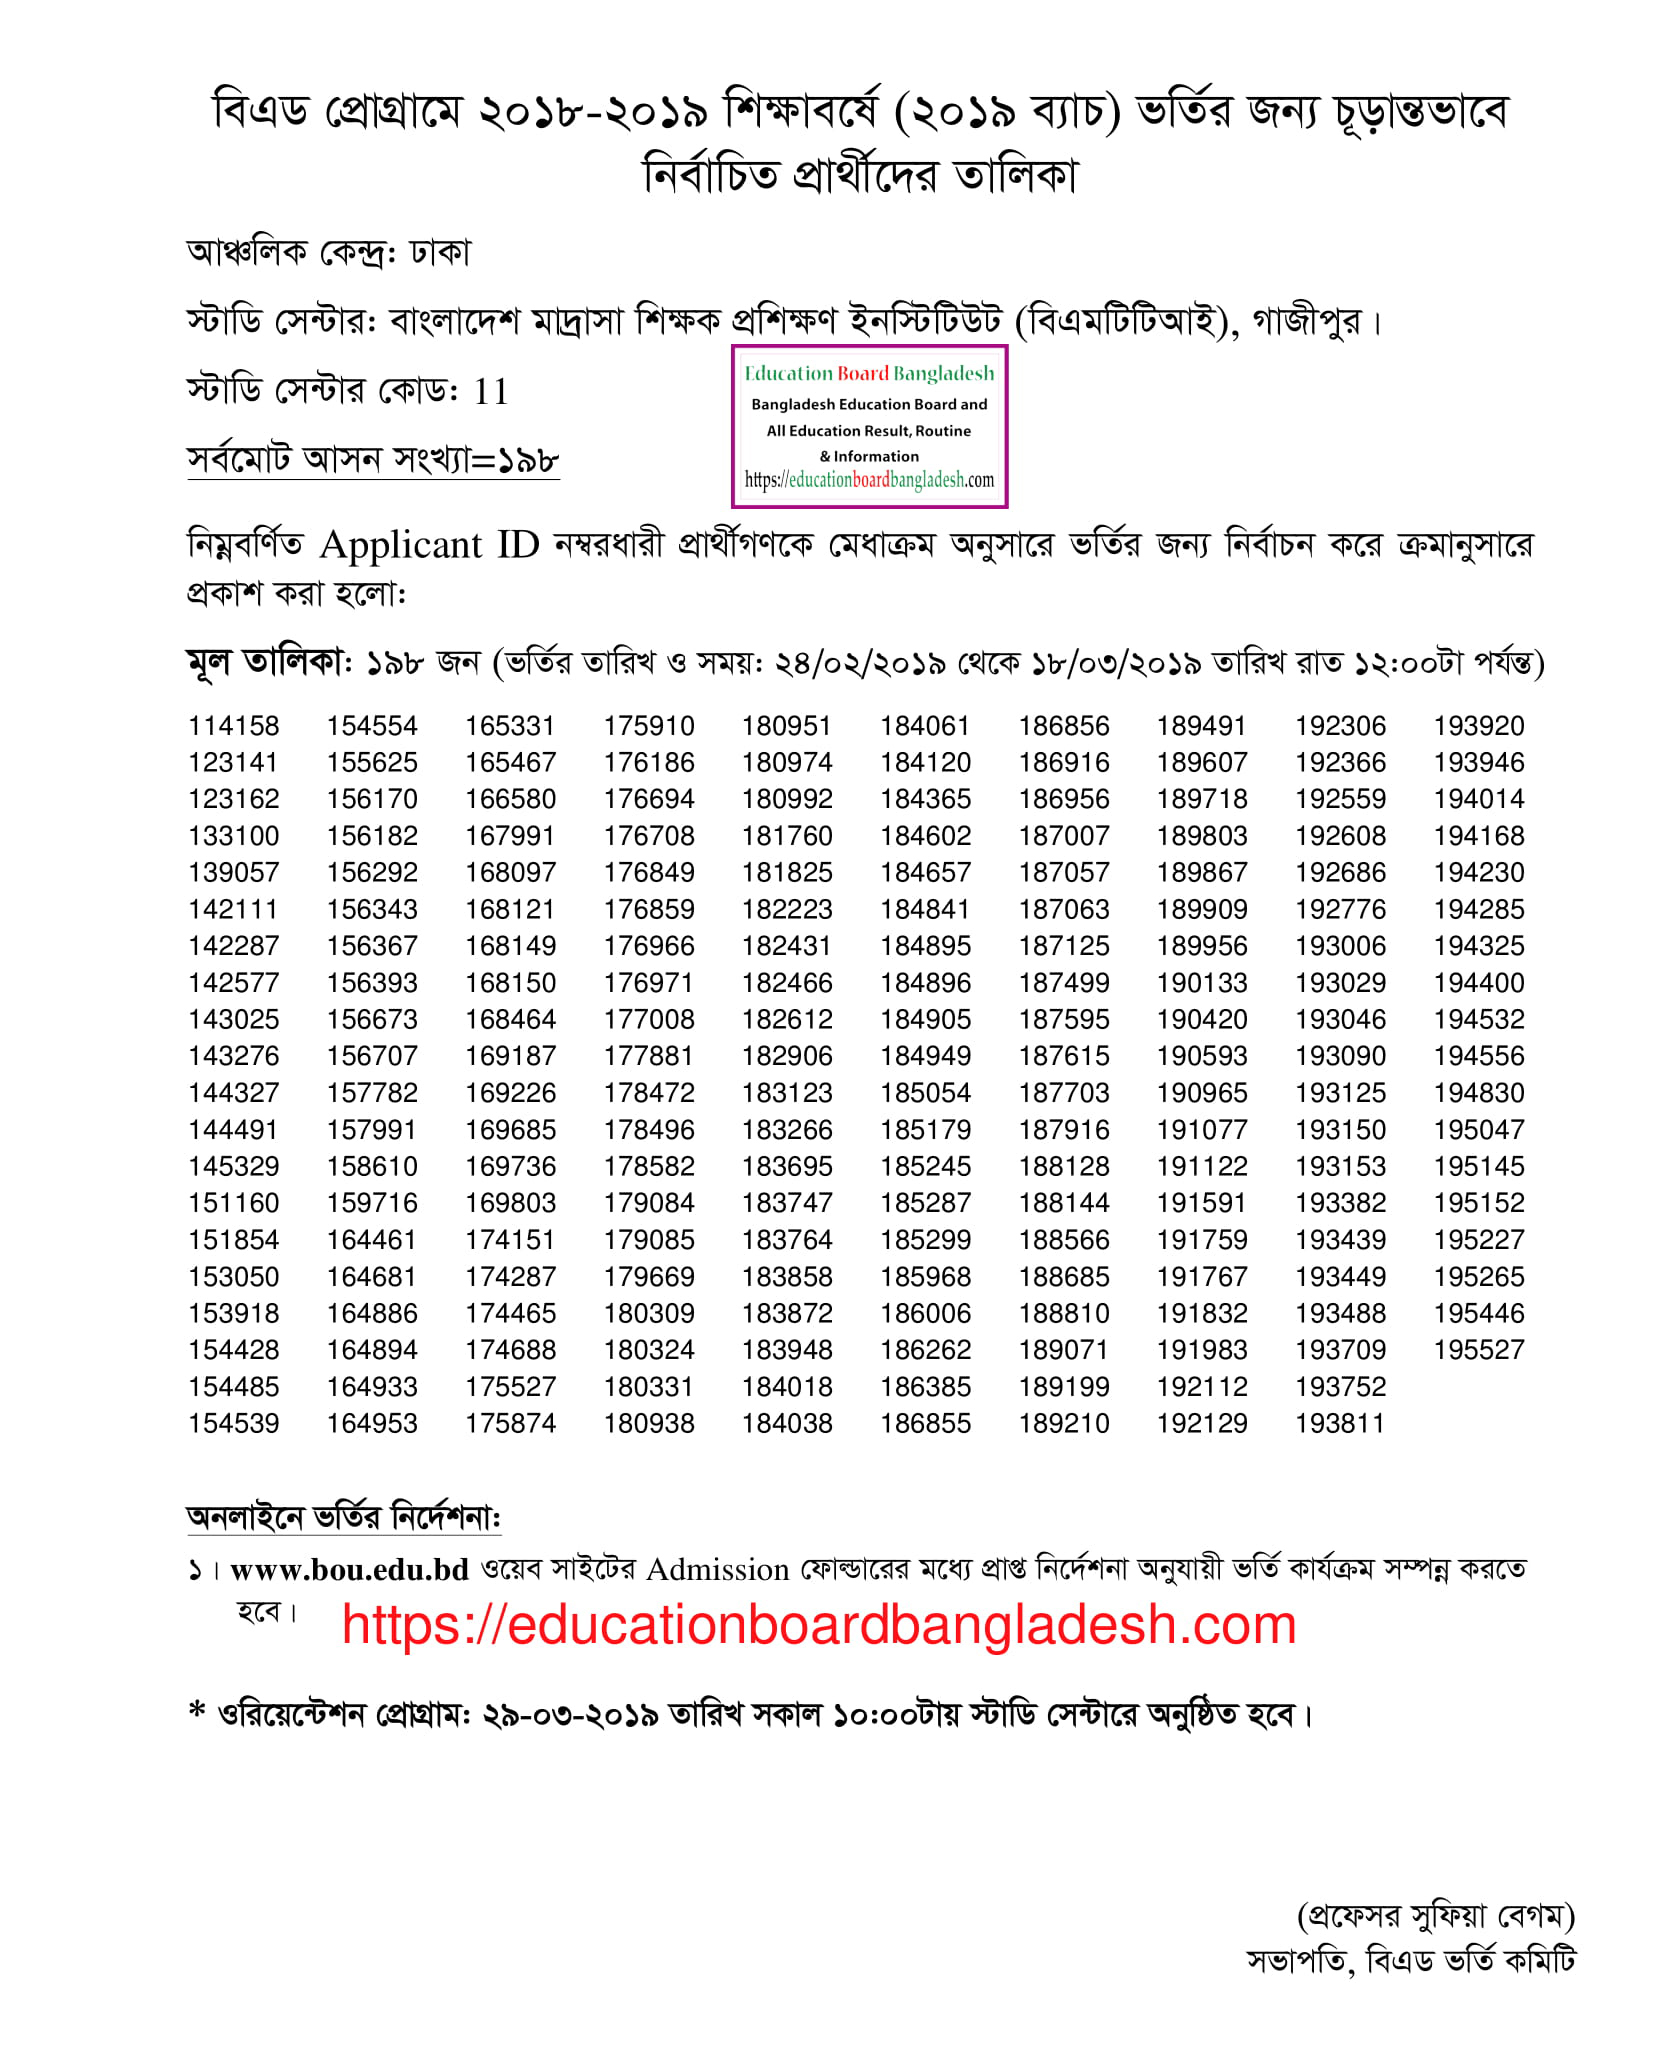 Dhaka Gazipur center Result (বাংলাদেশ মাদ্রাসা শিক্ষক প্রশিক্ষণ ইনস্টিটিউট (বিএমটিটিআই), গাজীপুর)